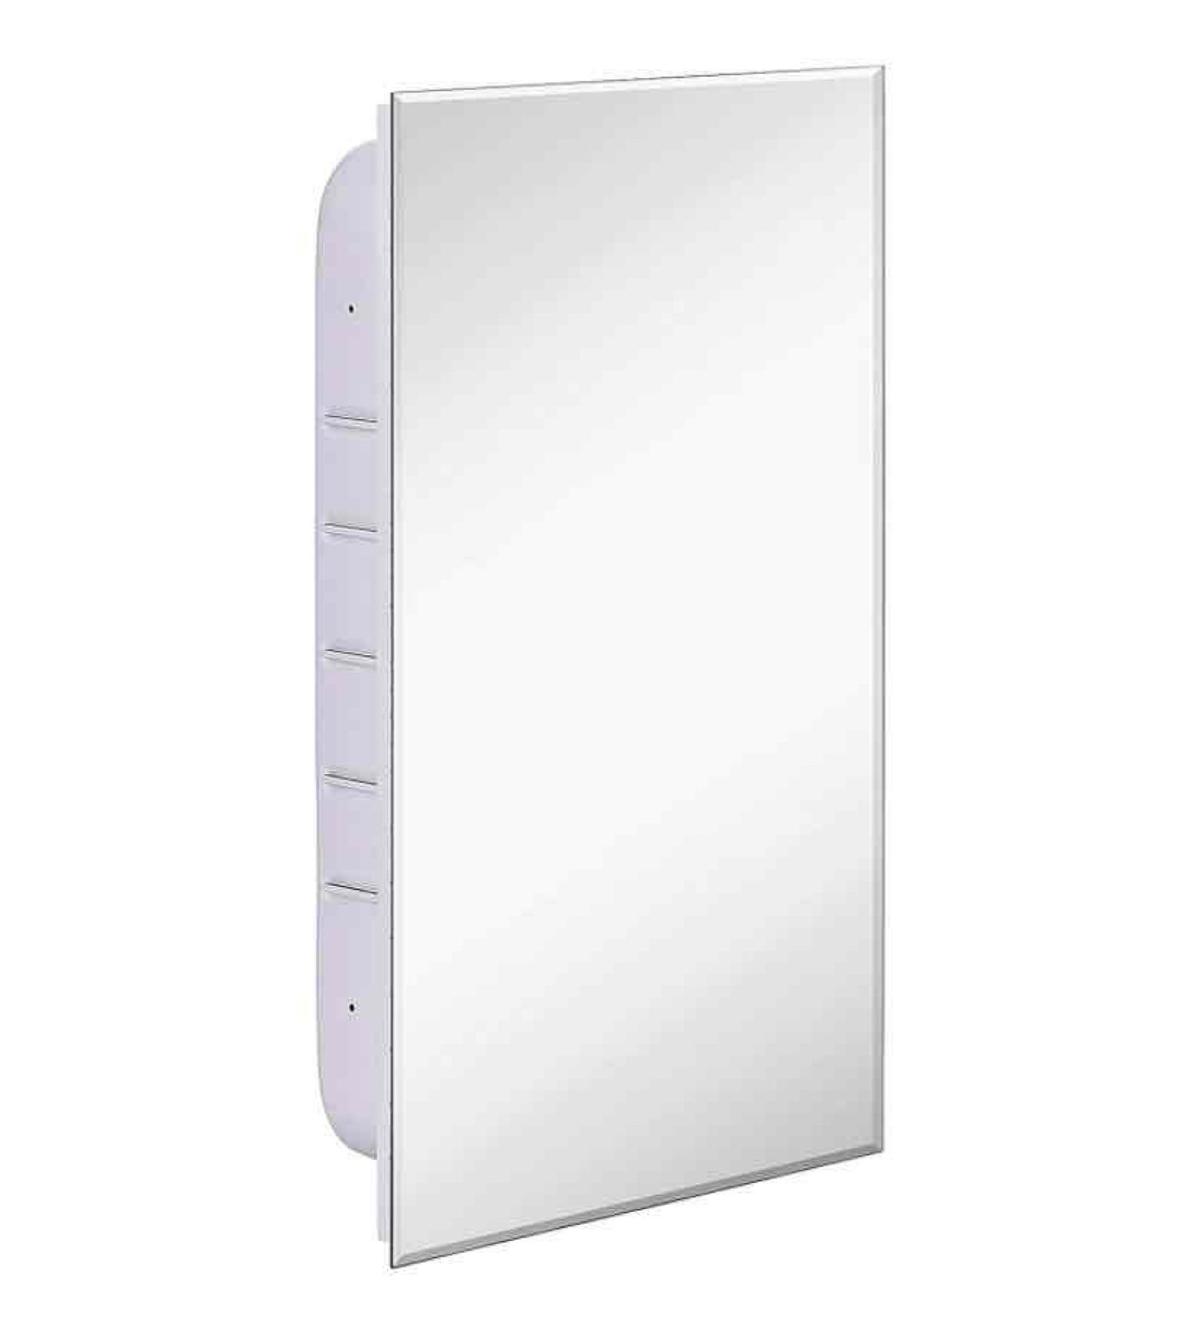 Hamilton Hills 16x26 inch White Recessed Medicine Cabinet with Mirror